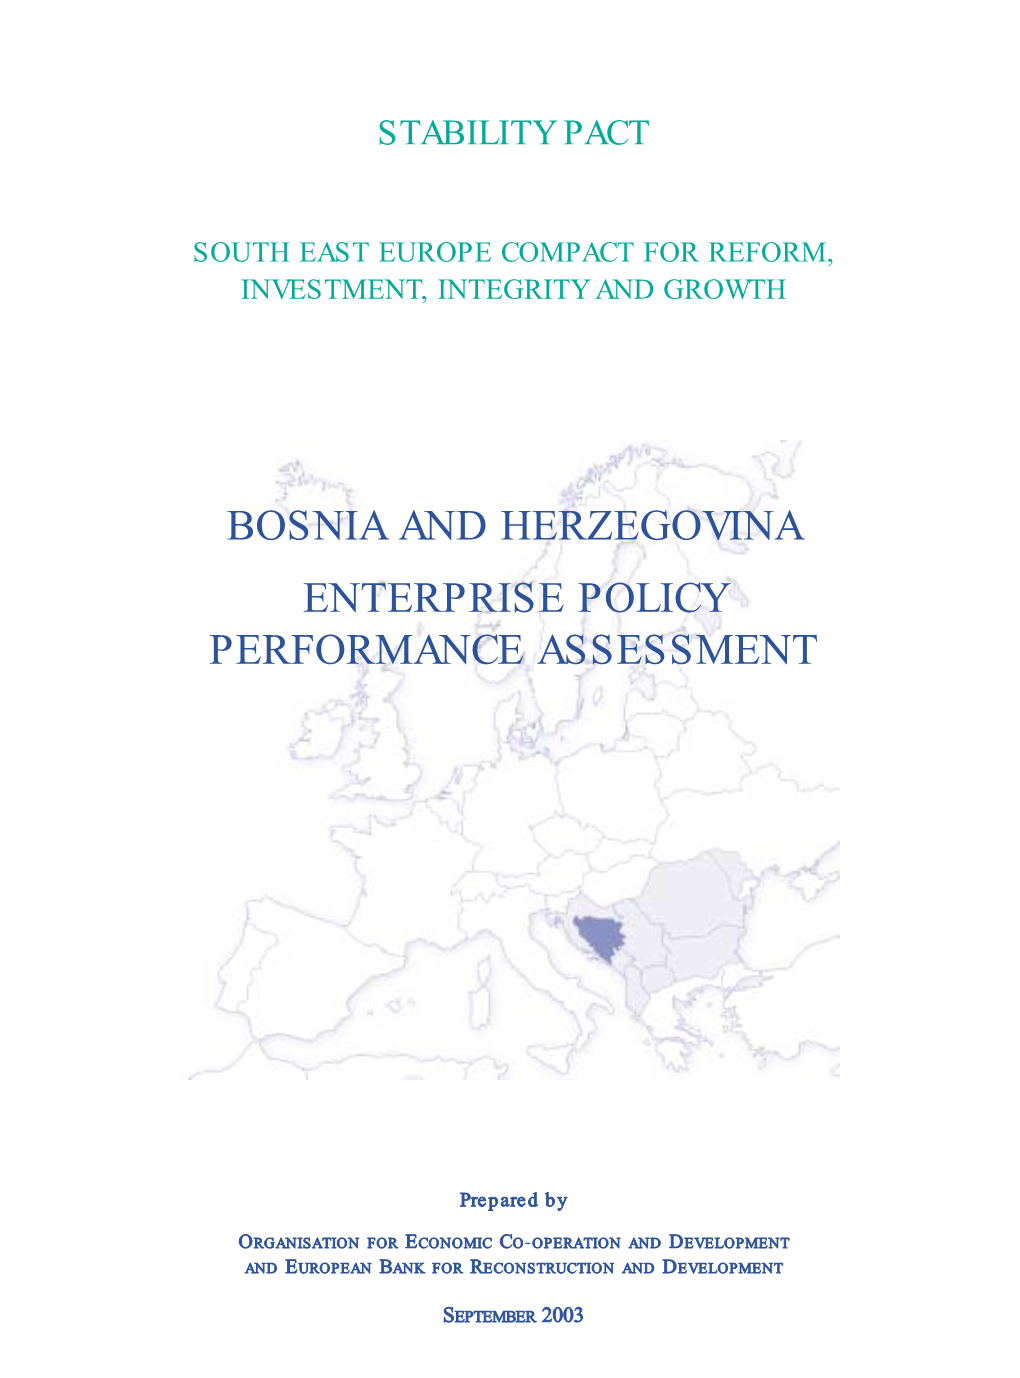 Bosnia and Herzegovina Enterprise Policy Performance Assessment